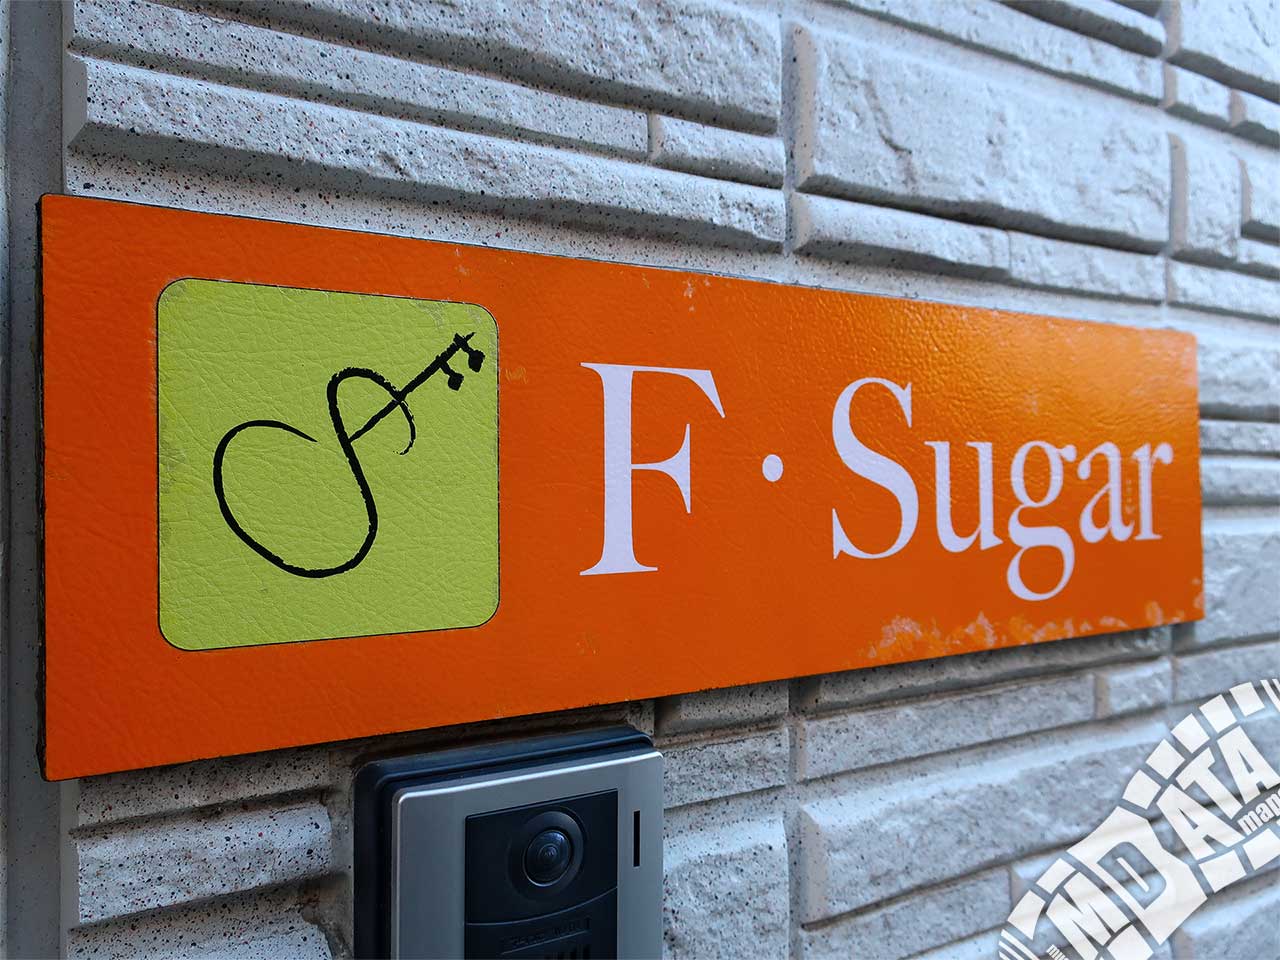 F-Sugar (エフ・シュガー)の写真 撮影日:2018/12/25 Photo taken on 2018/12/25